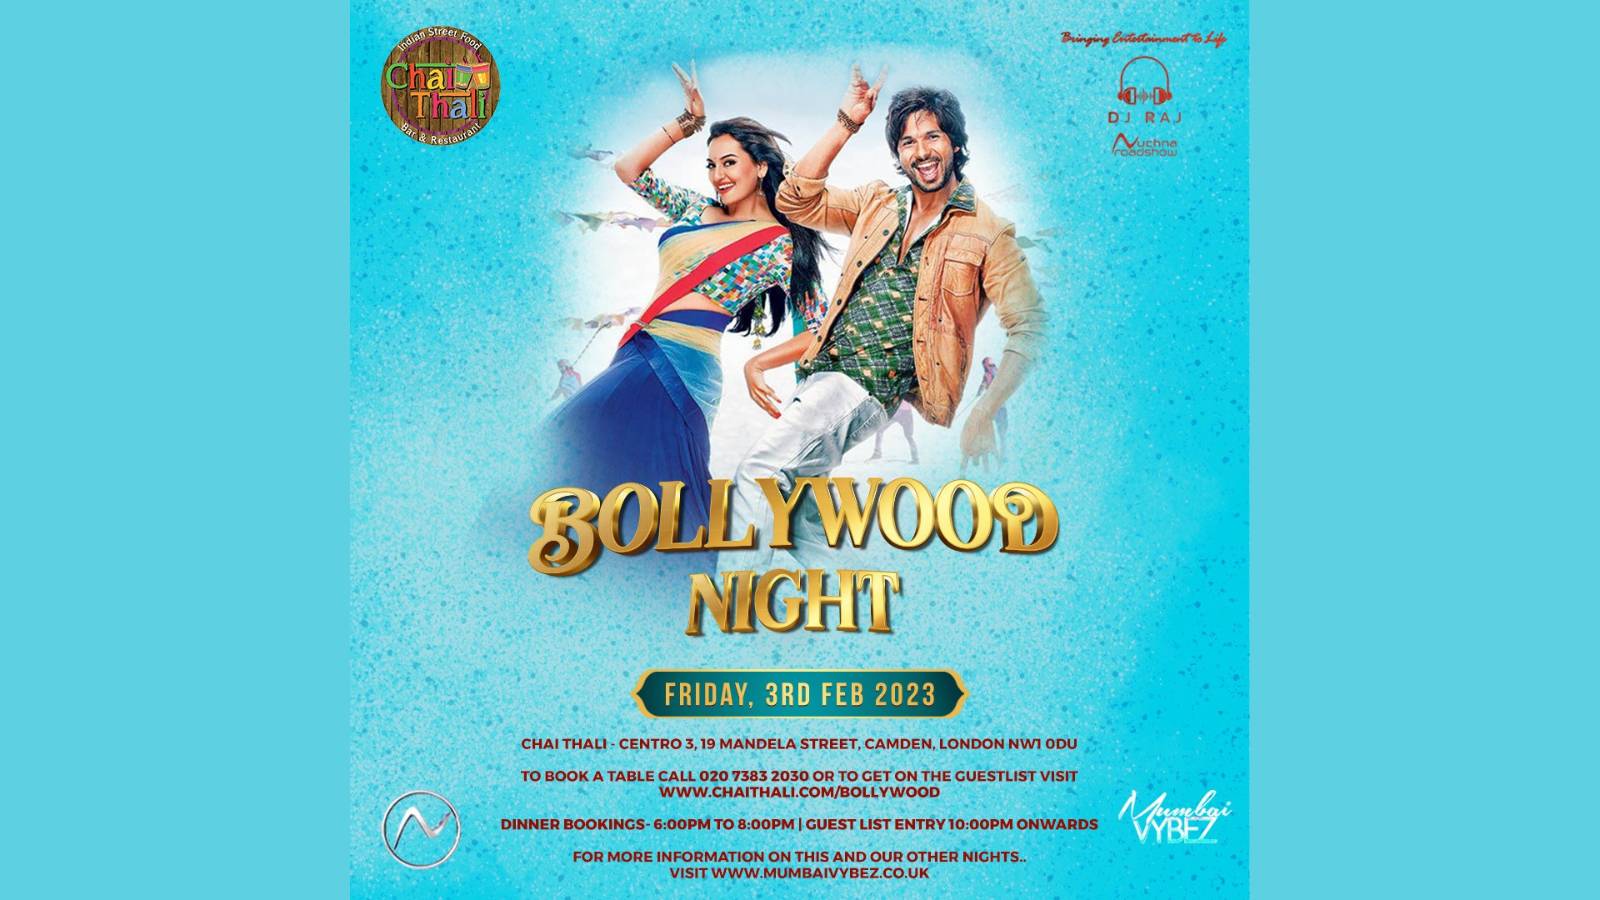 Bollywood Night 3rd February 2023 Camden, London at Chai Thali